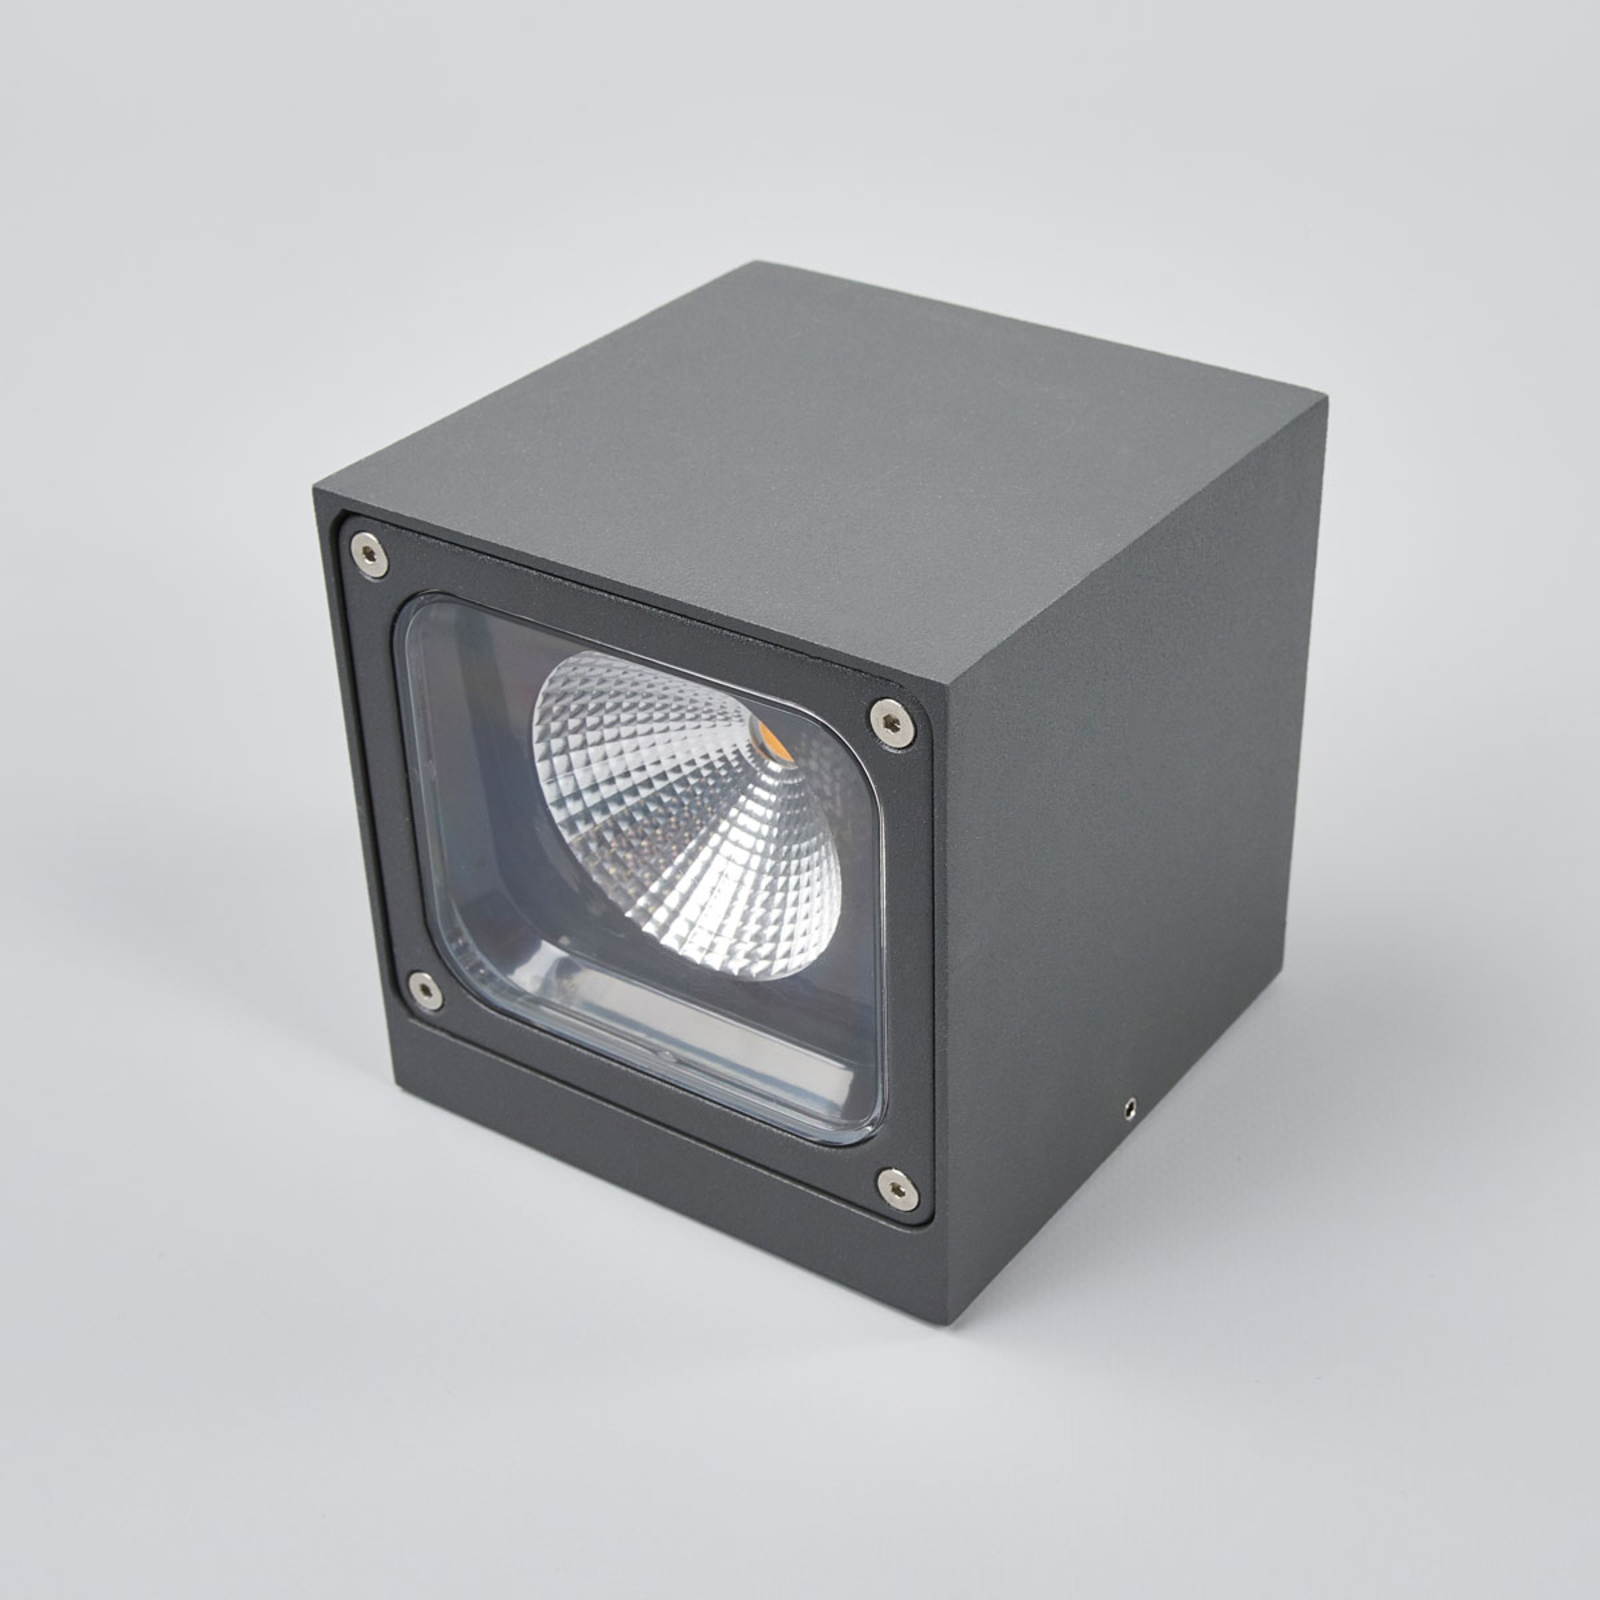 Merjem - LED outdoor wall light in dark grey